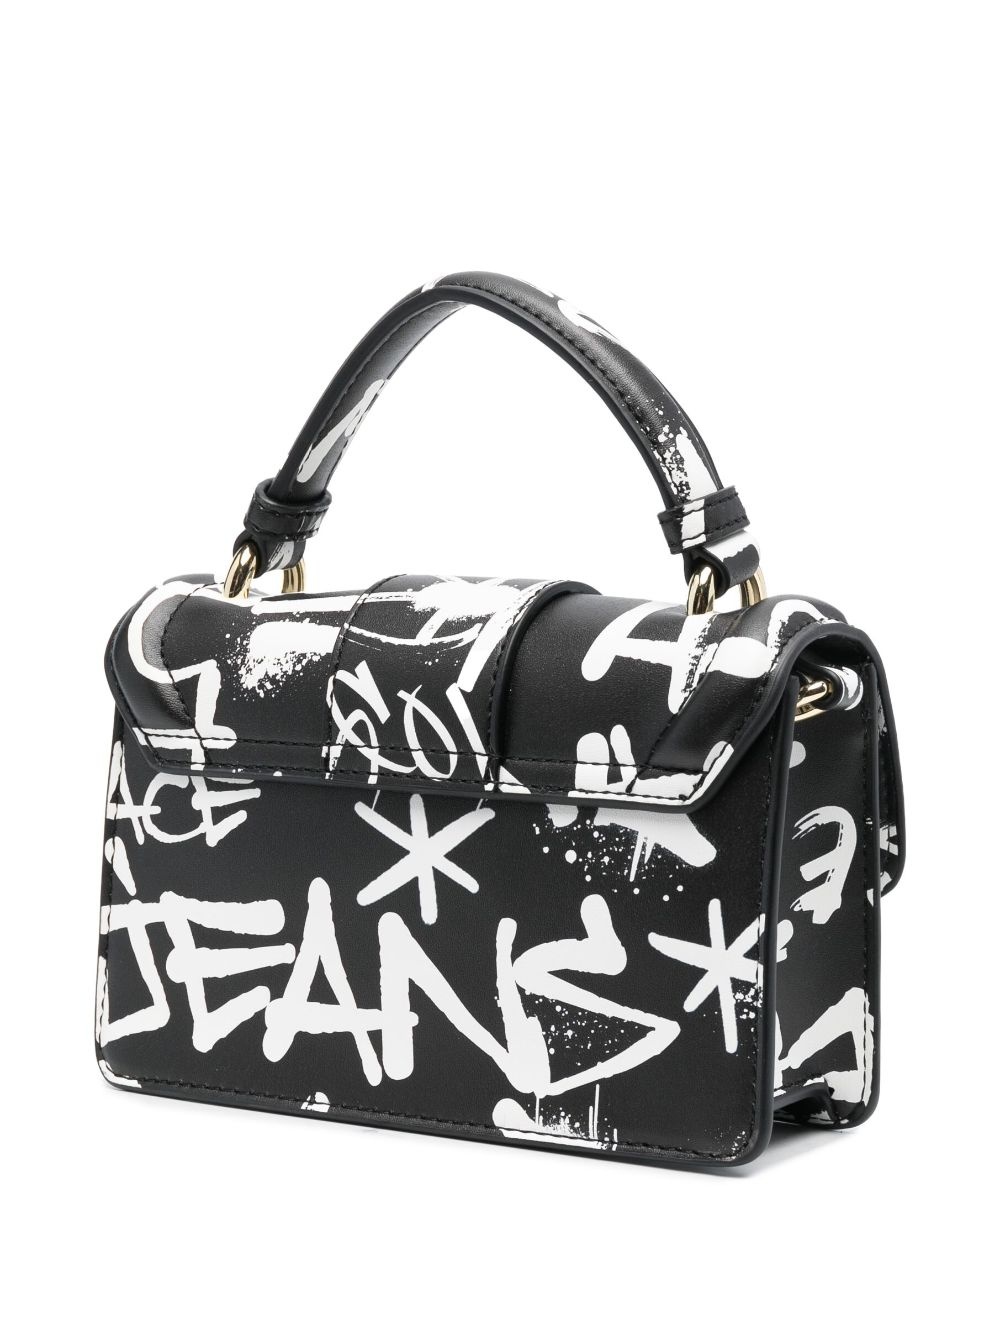 Versace Jeans Couture Logo Graffiti - Handbag for Woman - Black